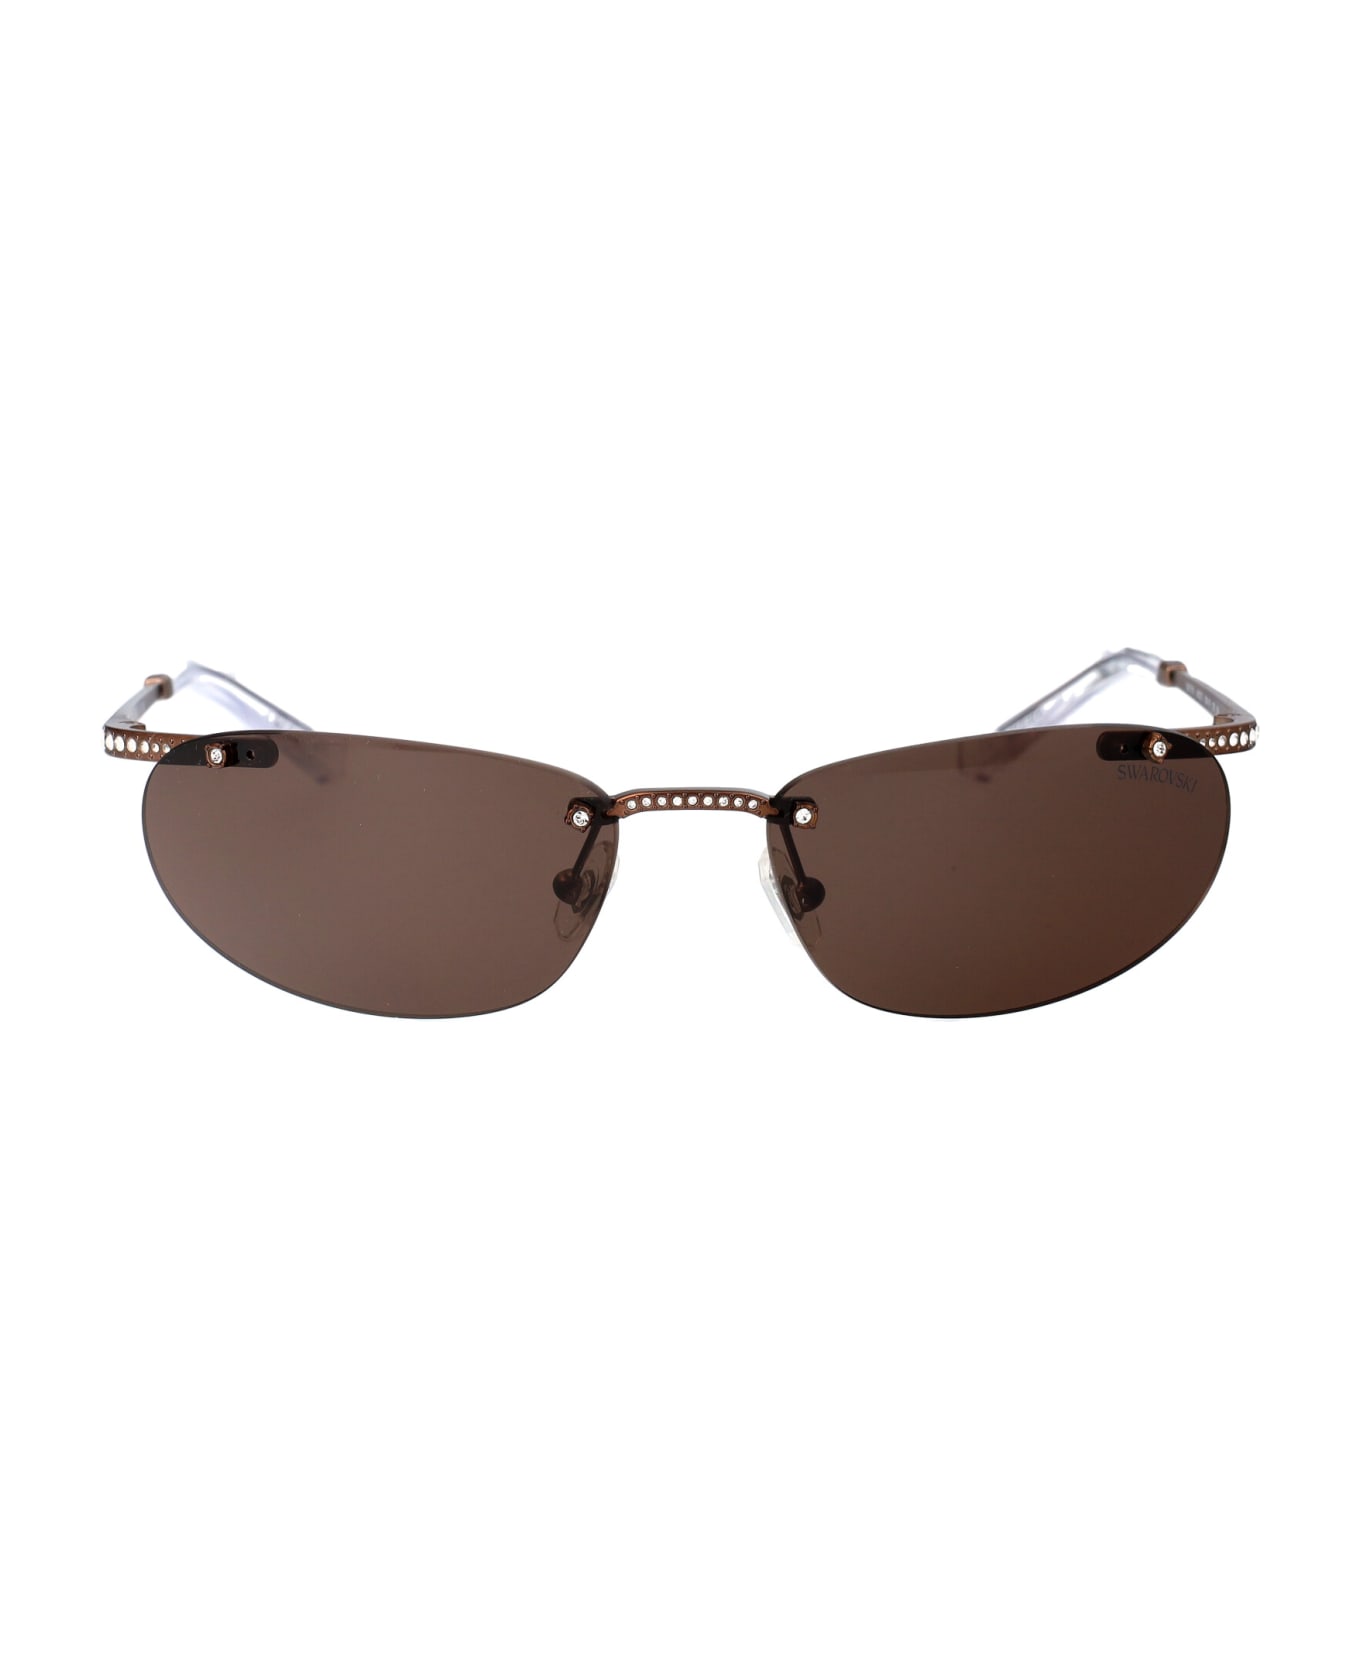 Swarovski 0sk7019 Sunglasses - 400273 Matte Brown